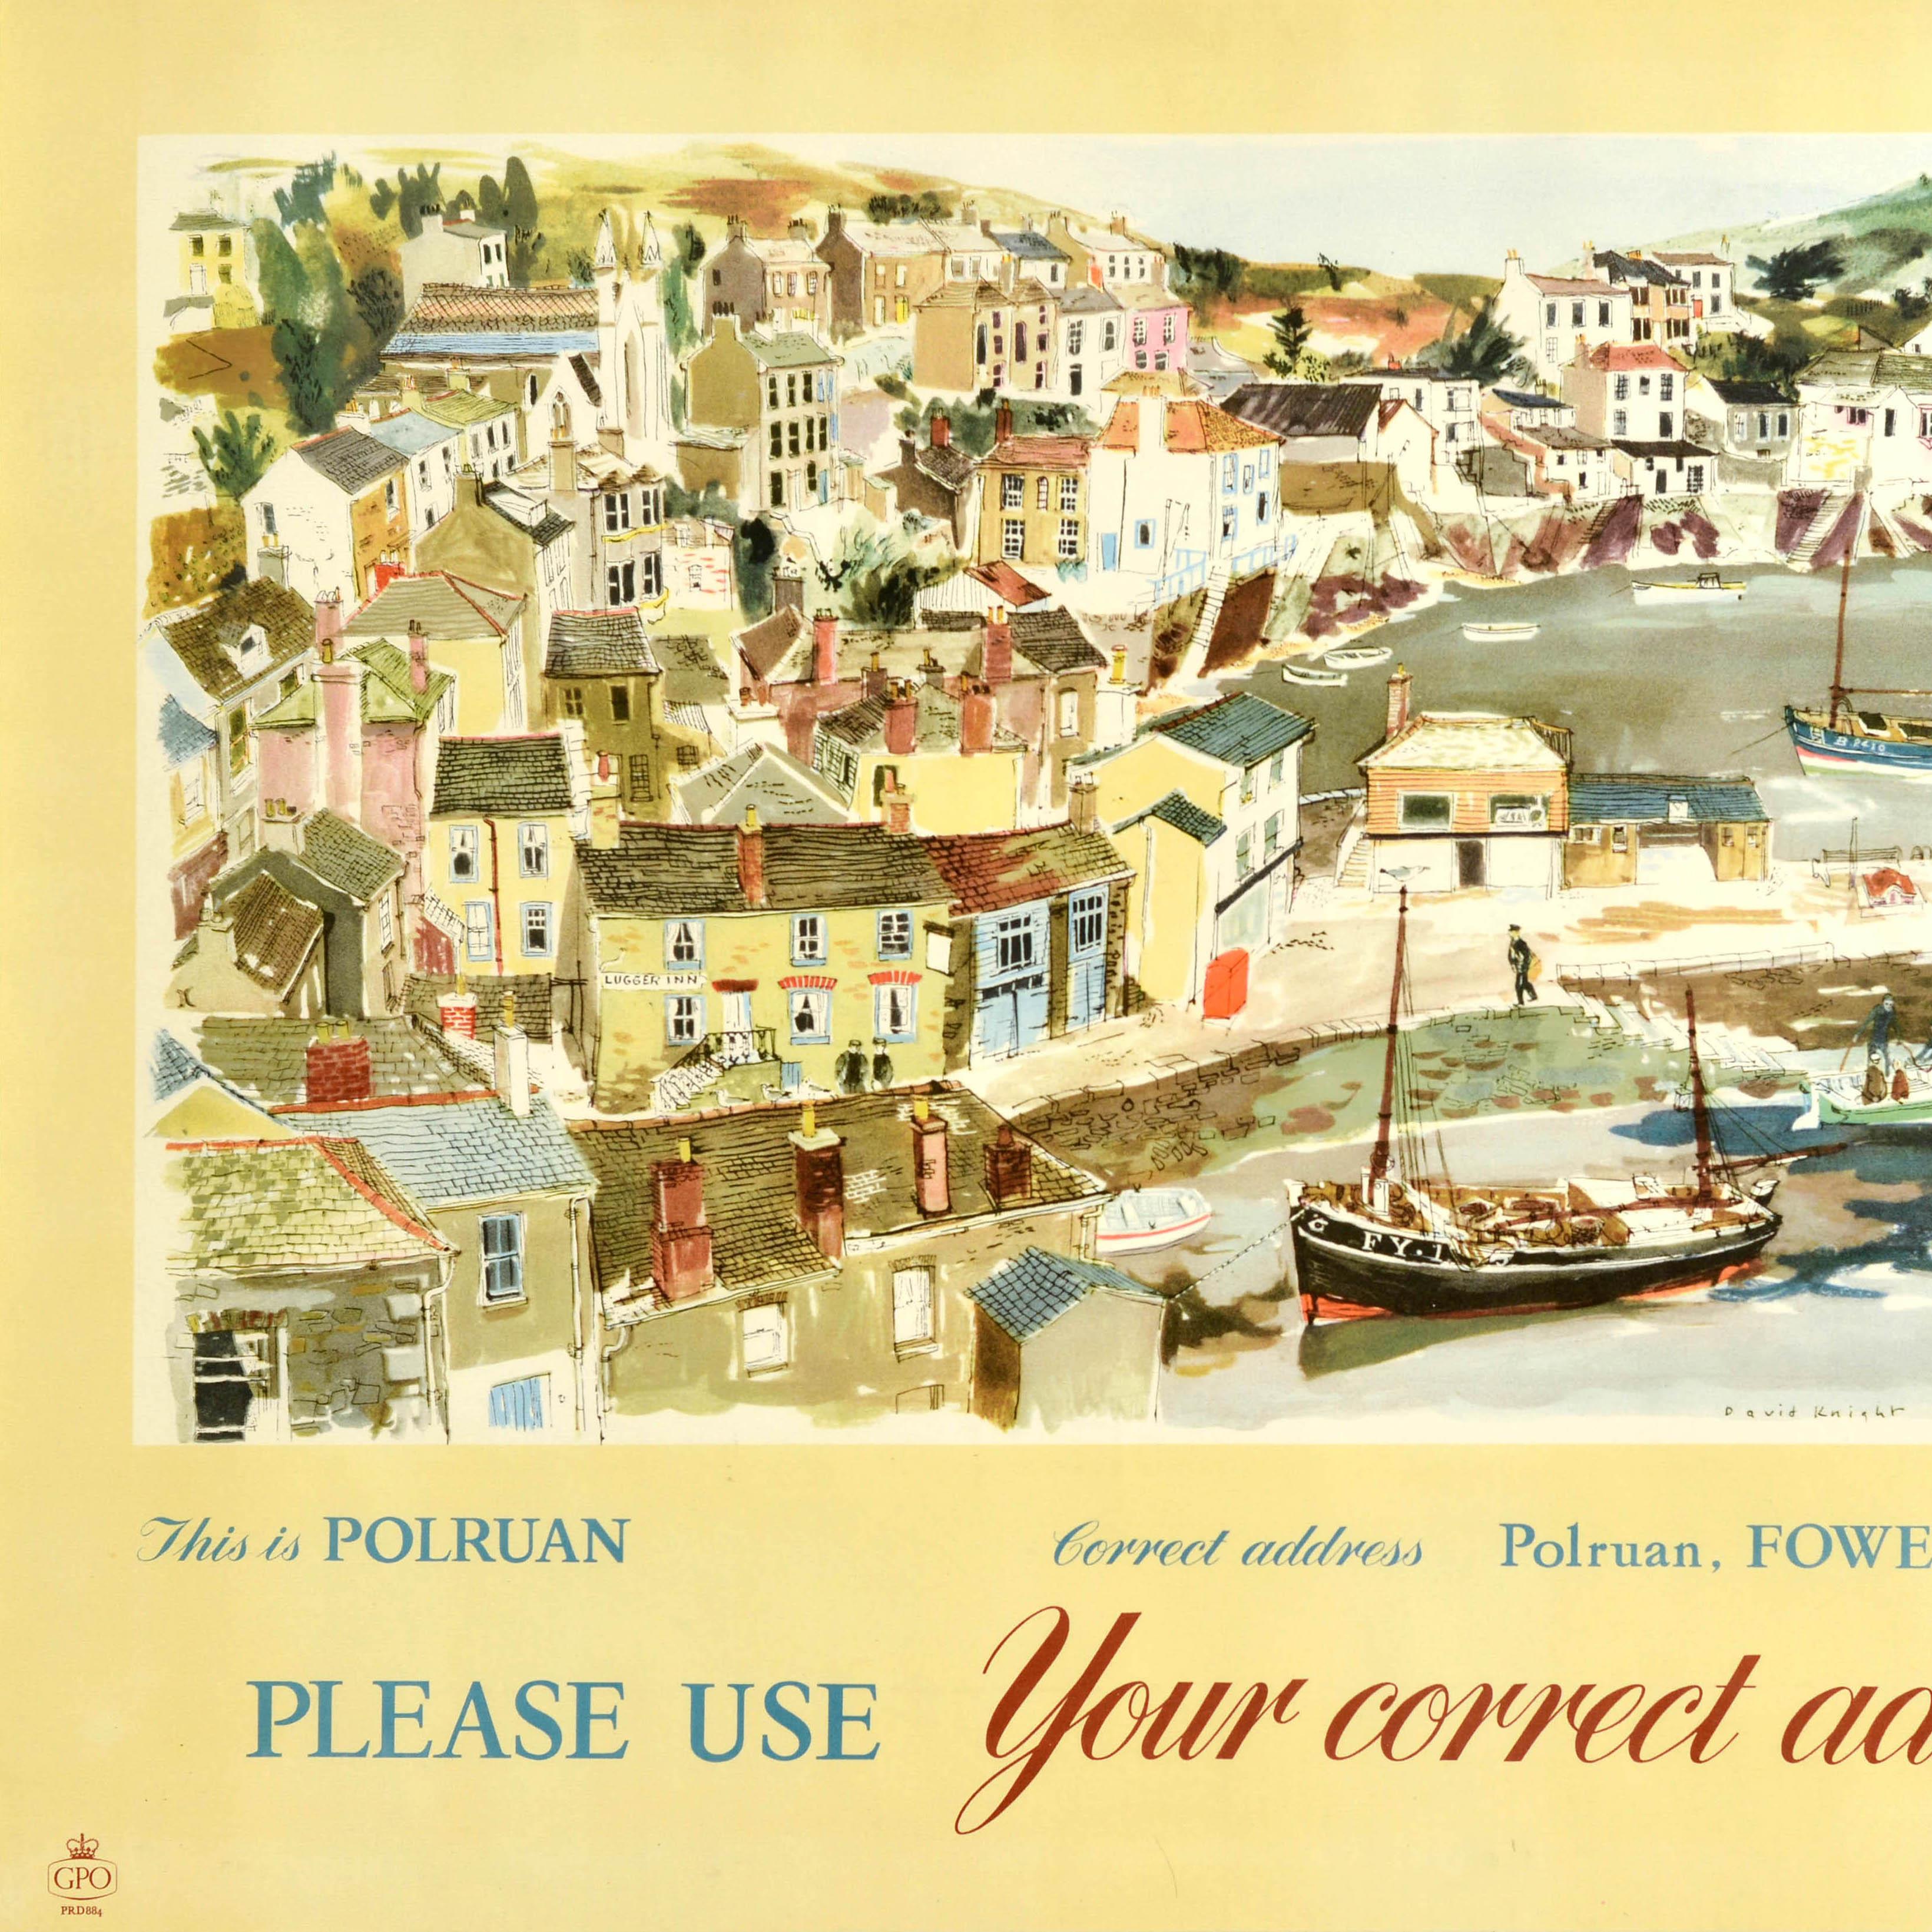 British Original Vintage Post Office Advertising Poster Polruan Fowey Cornwall GPO UK For Sale